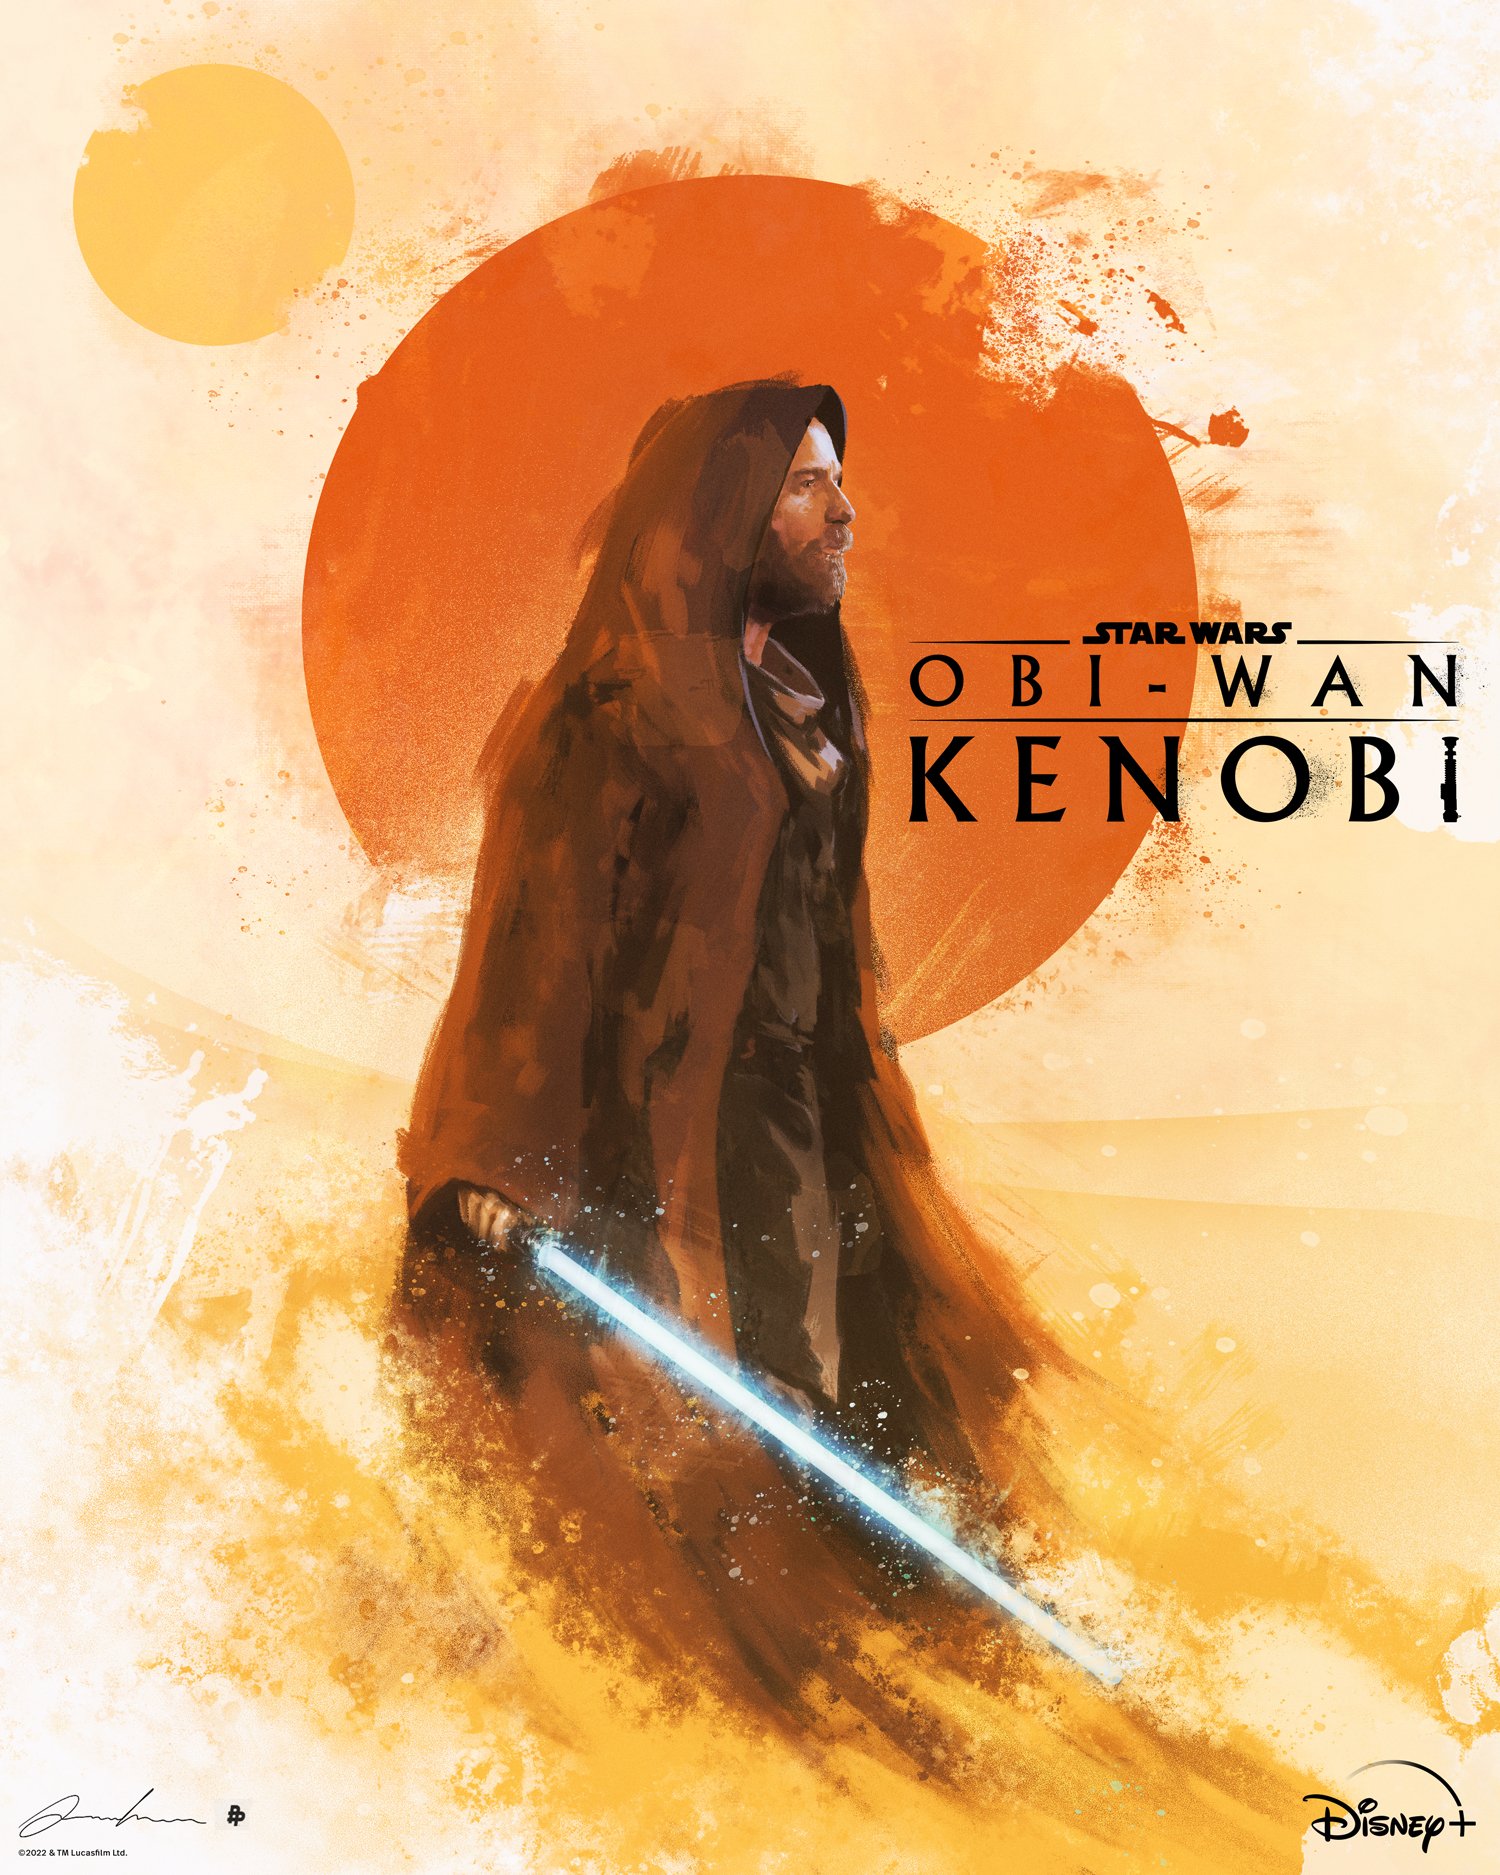 Official Disney/Lucas - Obi-Wan Kenobi